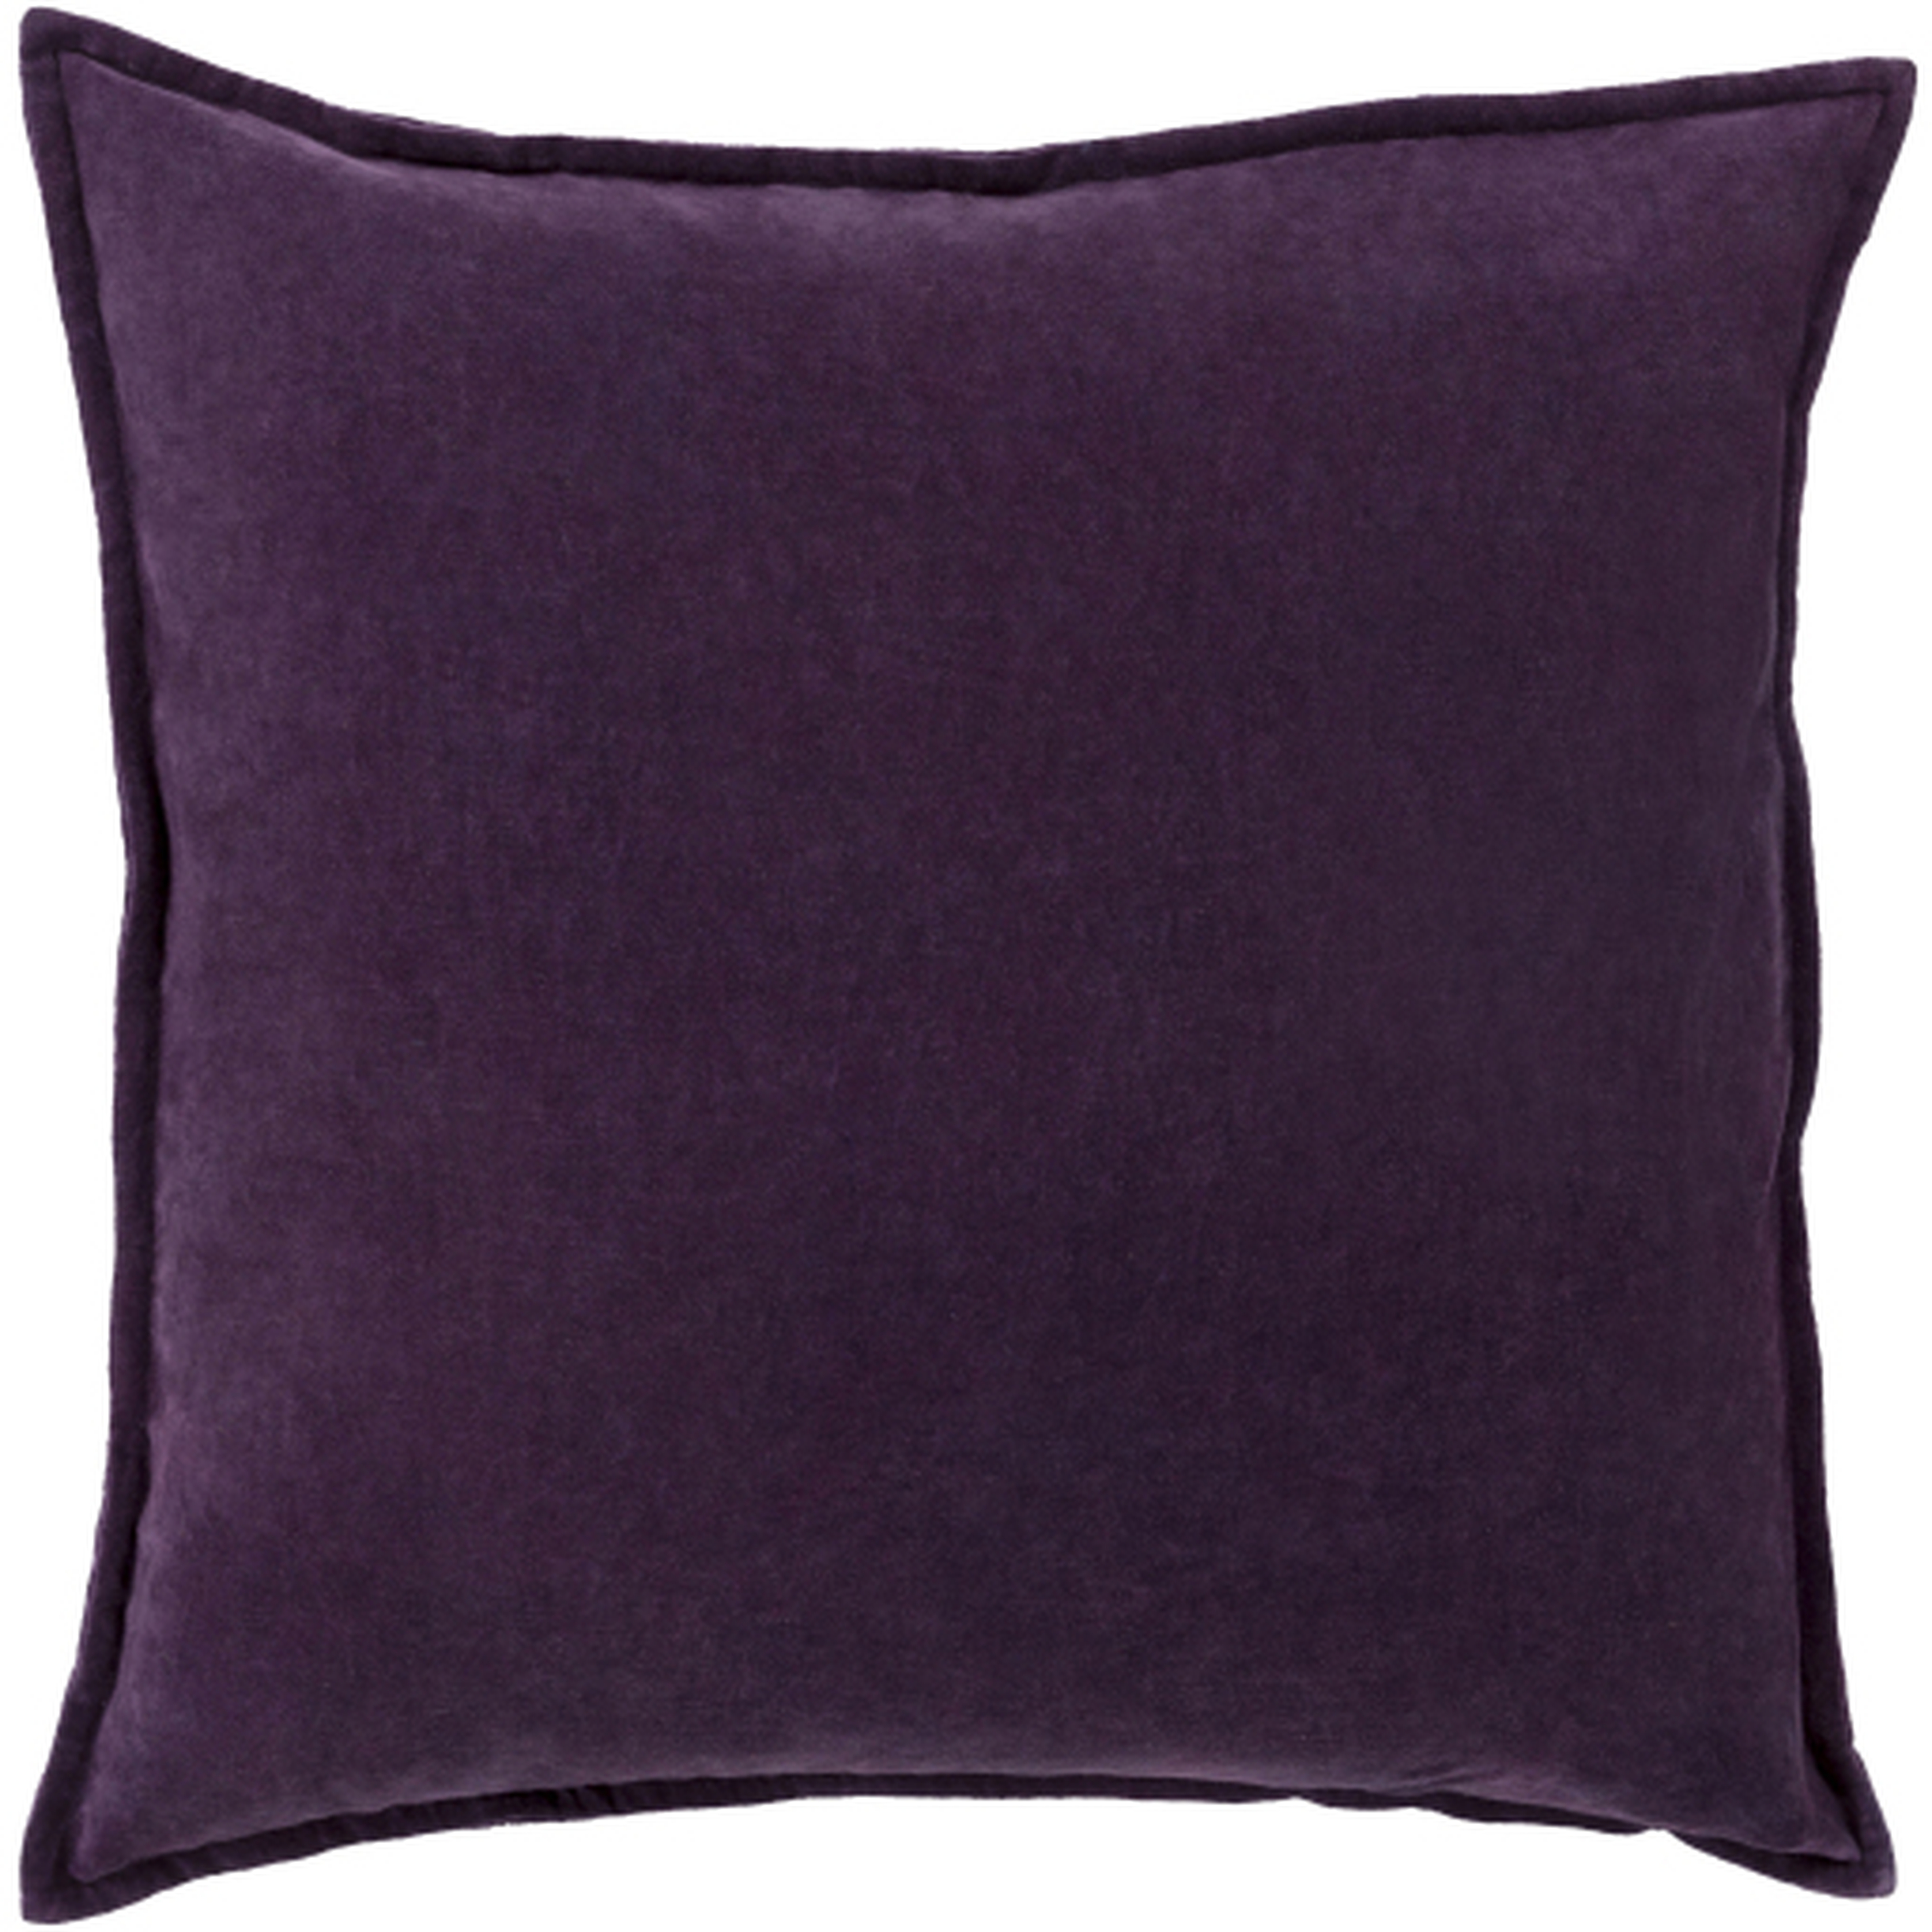 Cotton Velvet Throw Pillow, 20" x 20", with poly insert - Surya